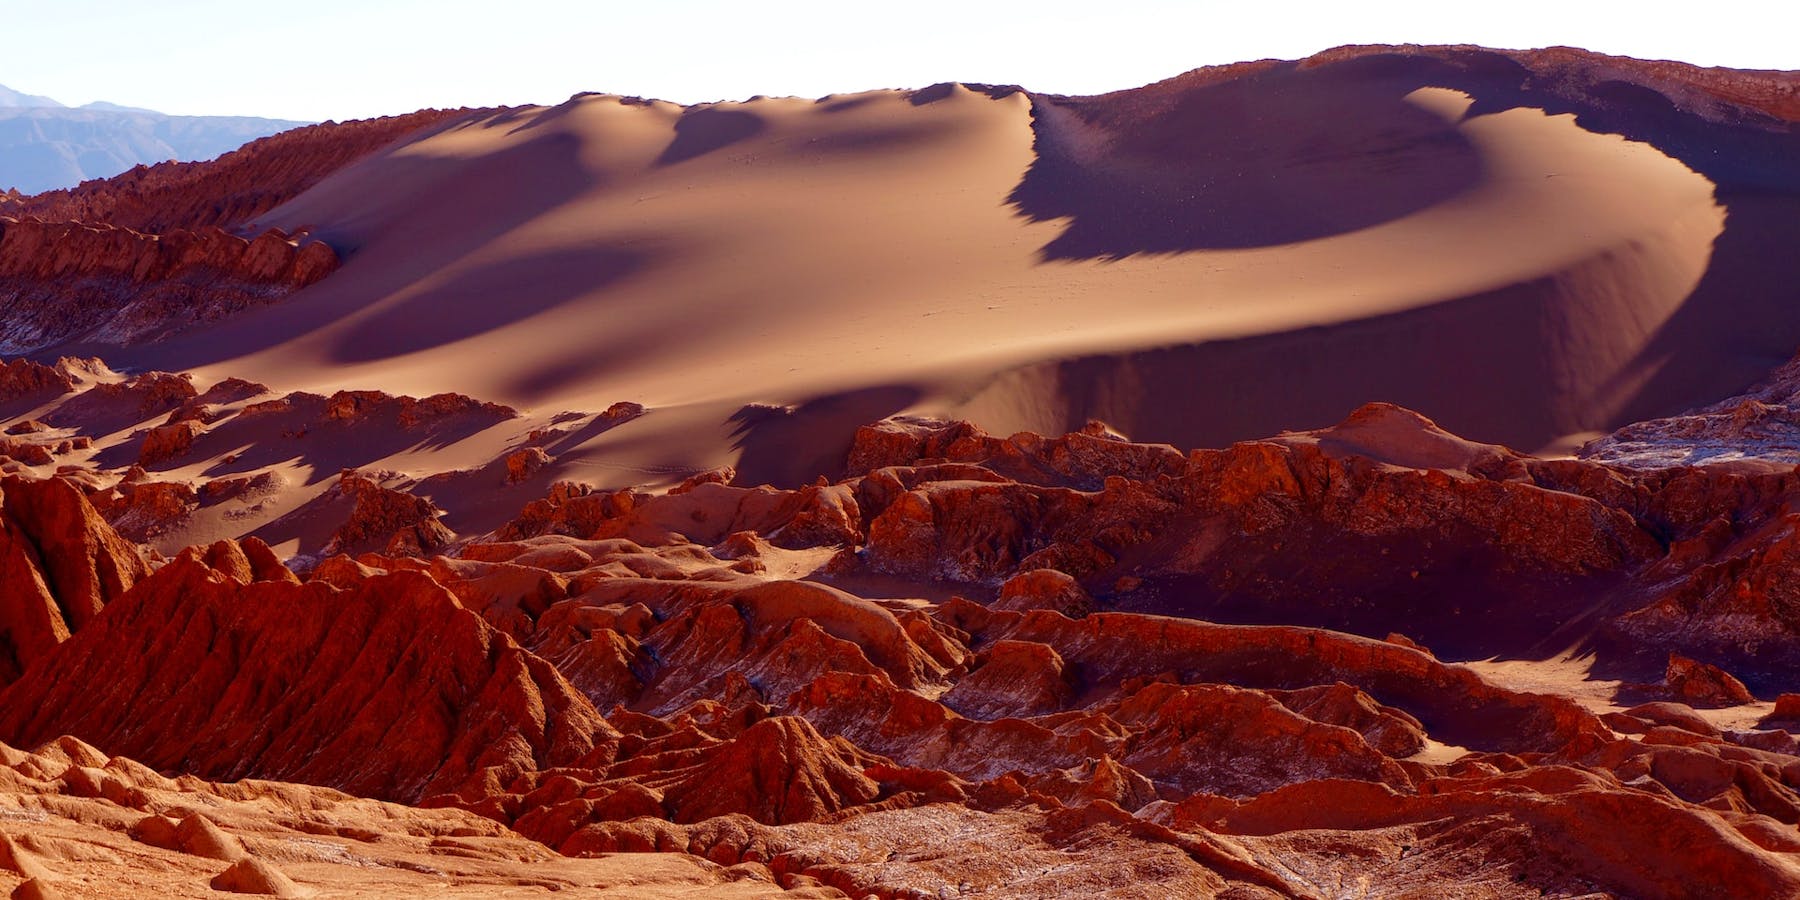 The arid desert of Atacama, Chile